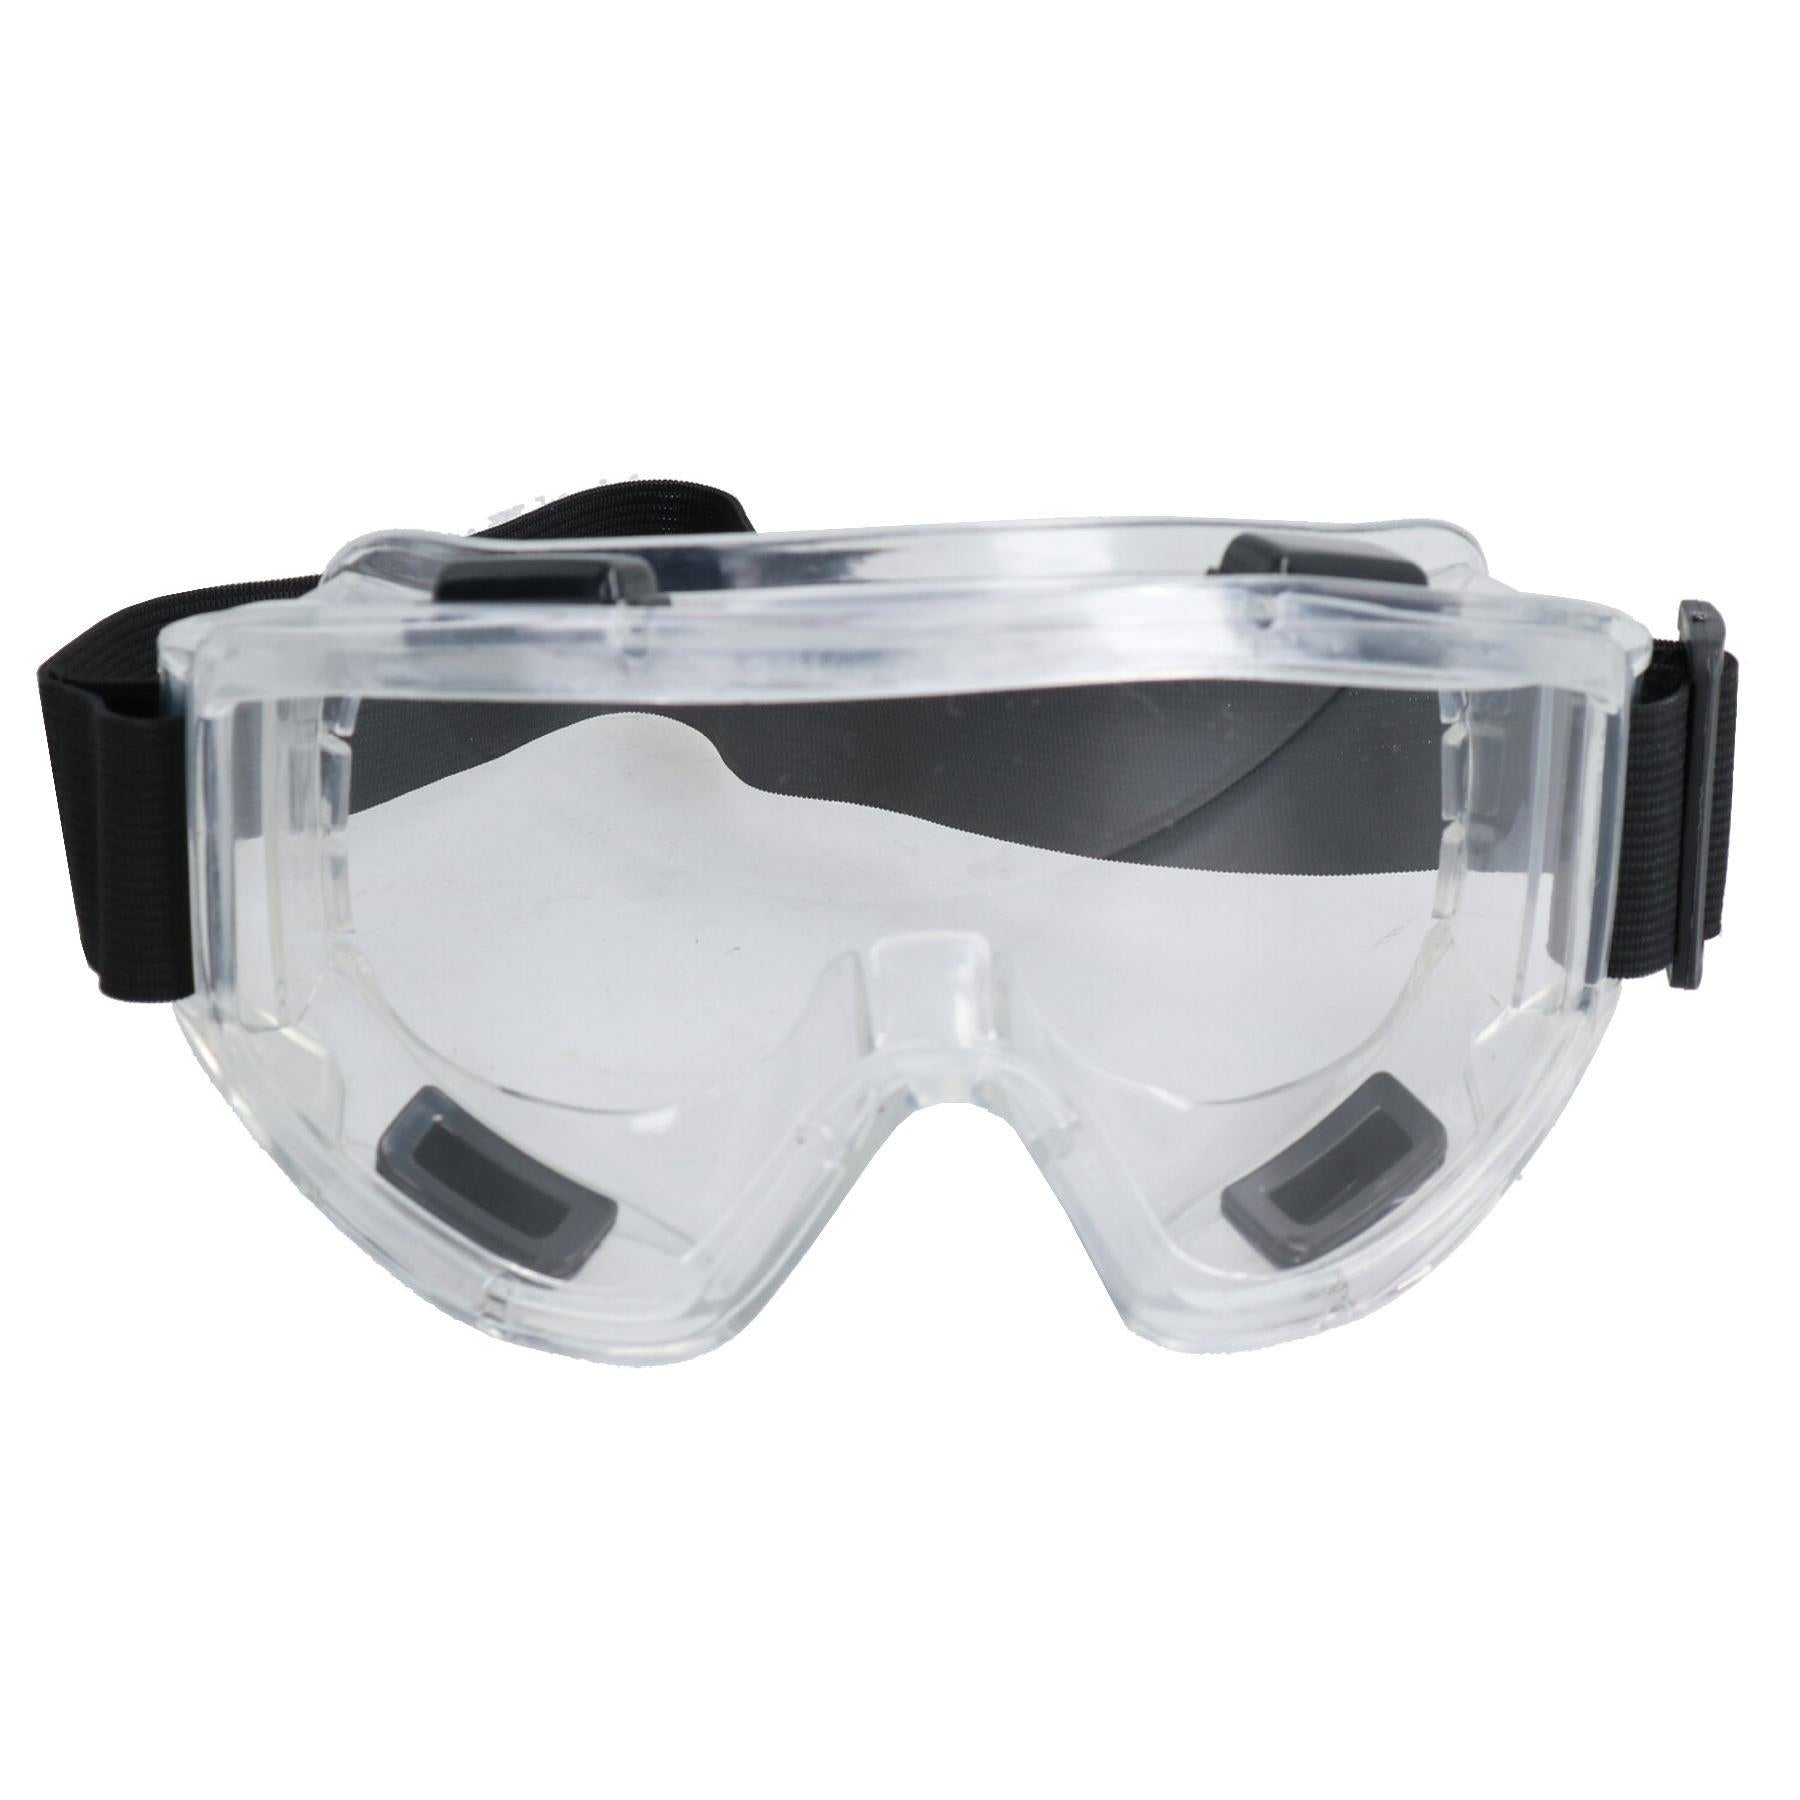 Premium Safety Goggles Glasses Eye Protection Sealed Design Flexible Frame